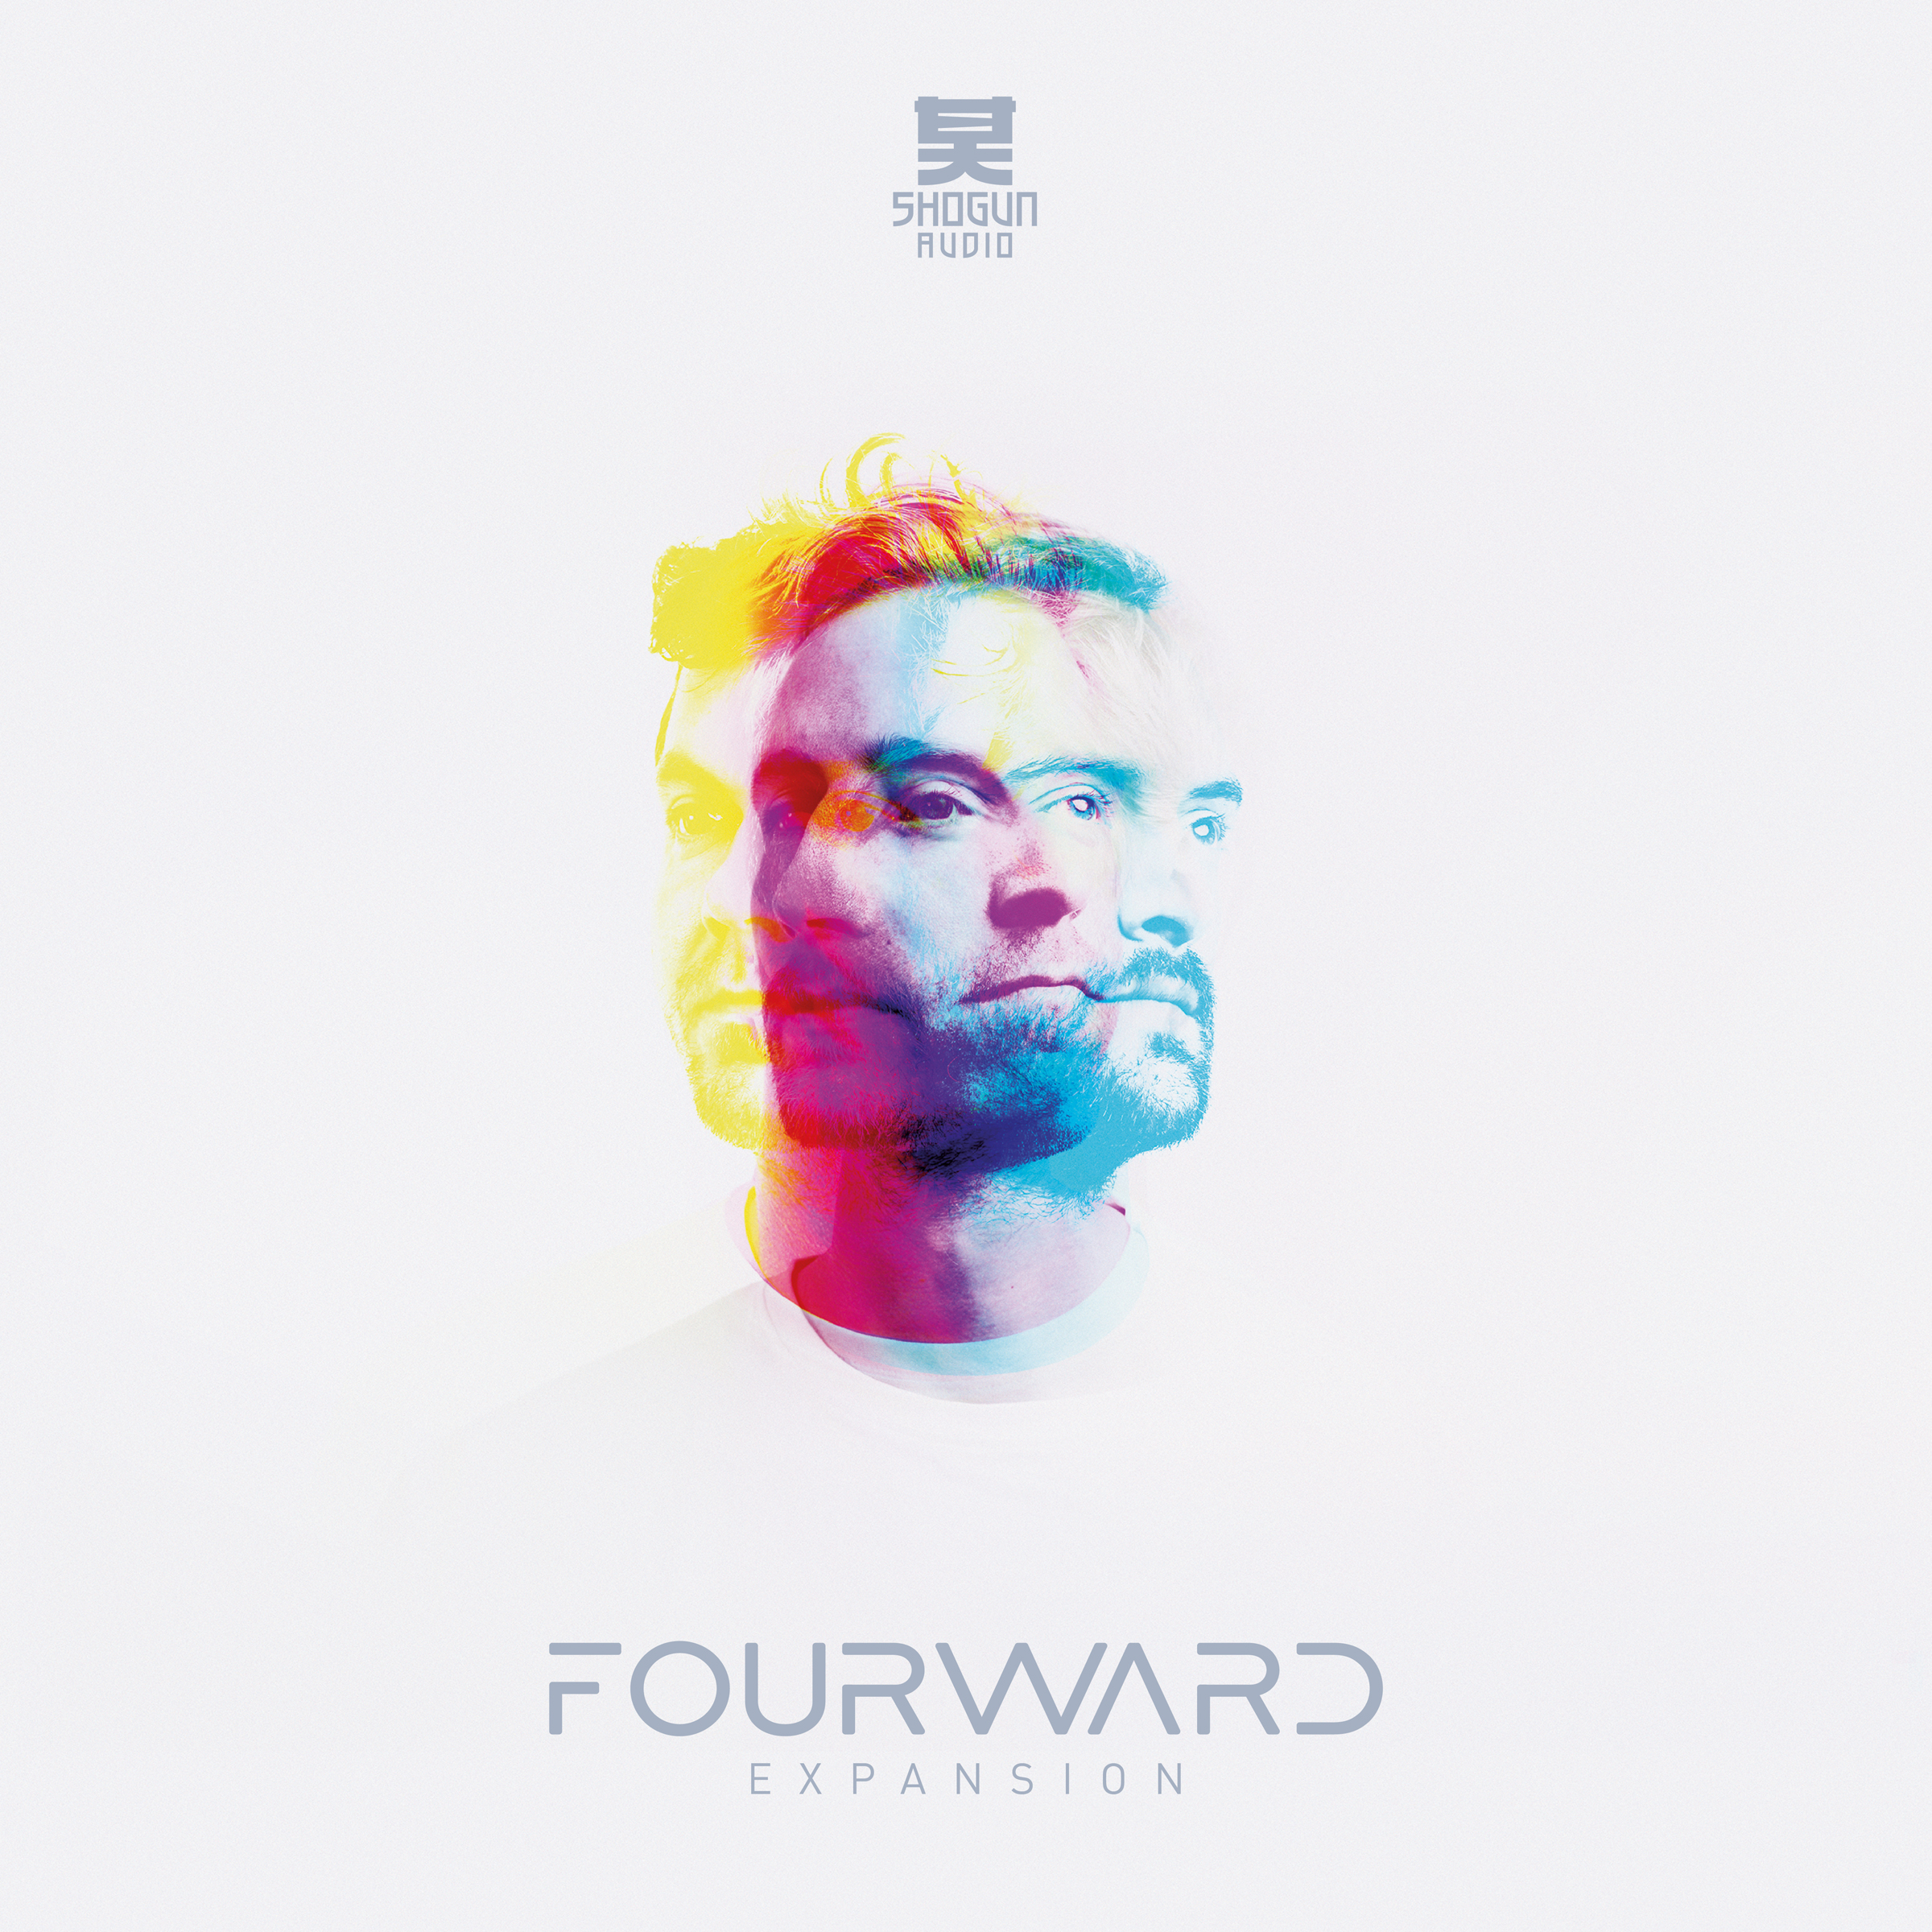 Fourward/EXPANSION CD